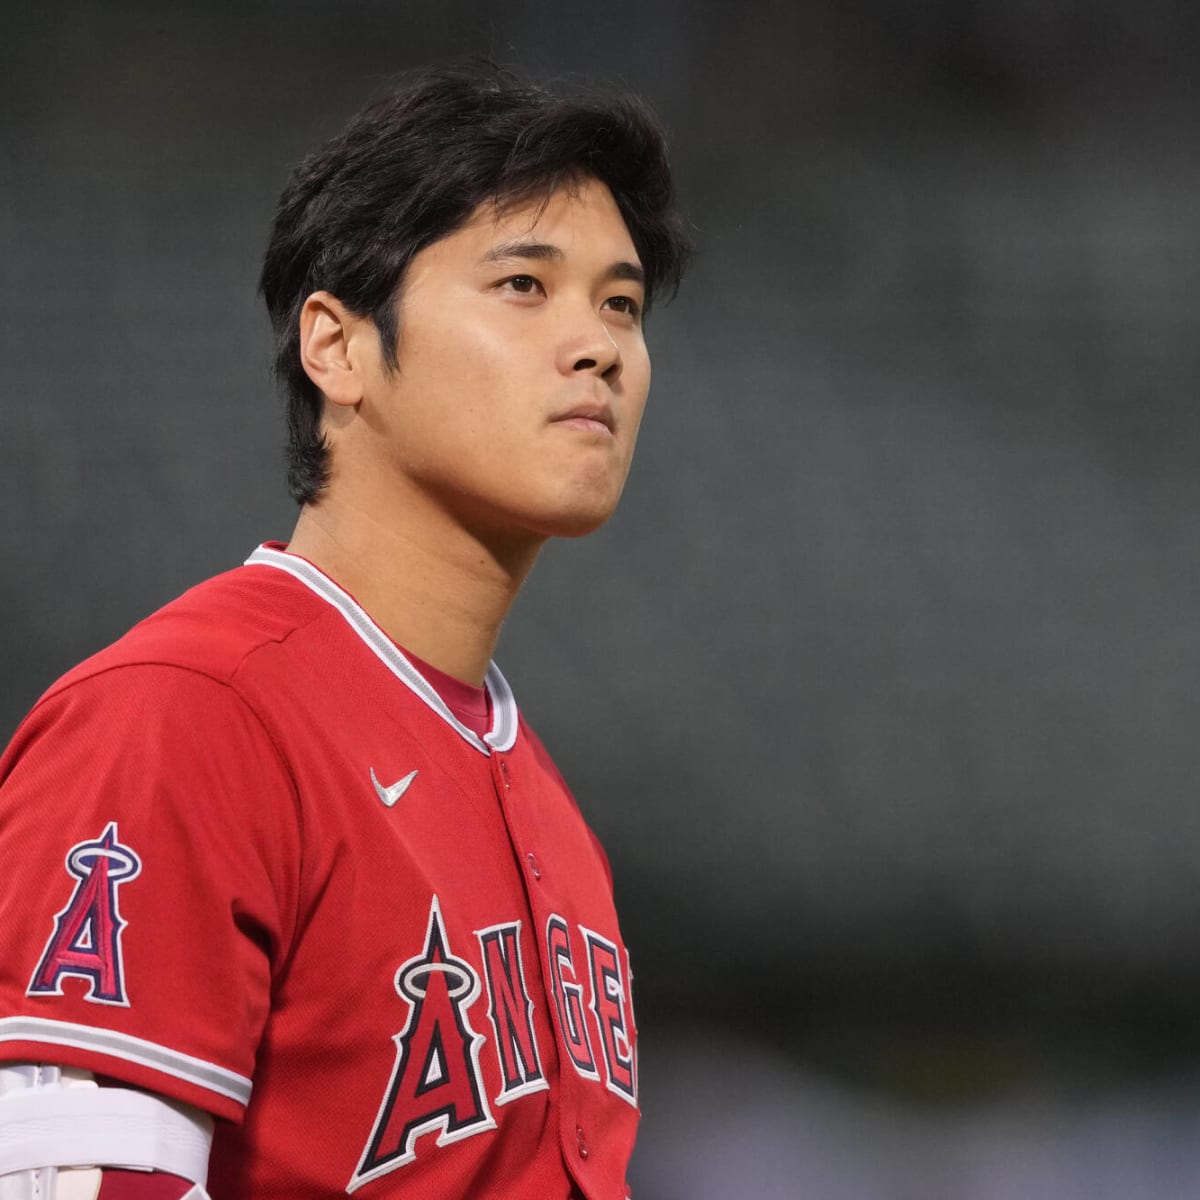 Shohei Ohtani Men's Cotton T-Shirt - Red - Los Angeles | 500 Level Major League Baseball Players Association (MLBPA)